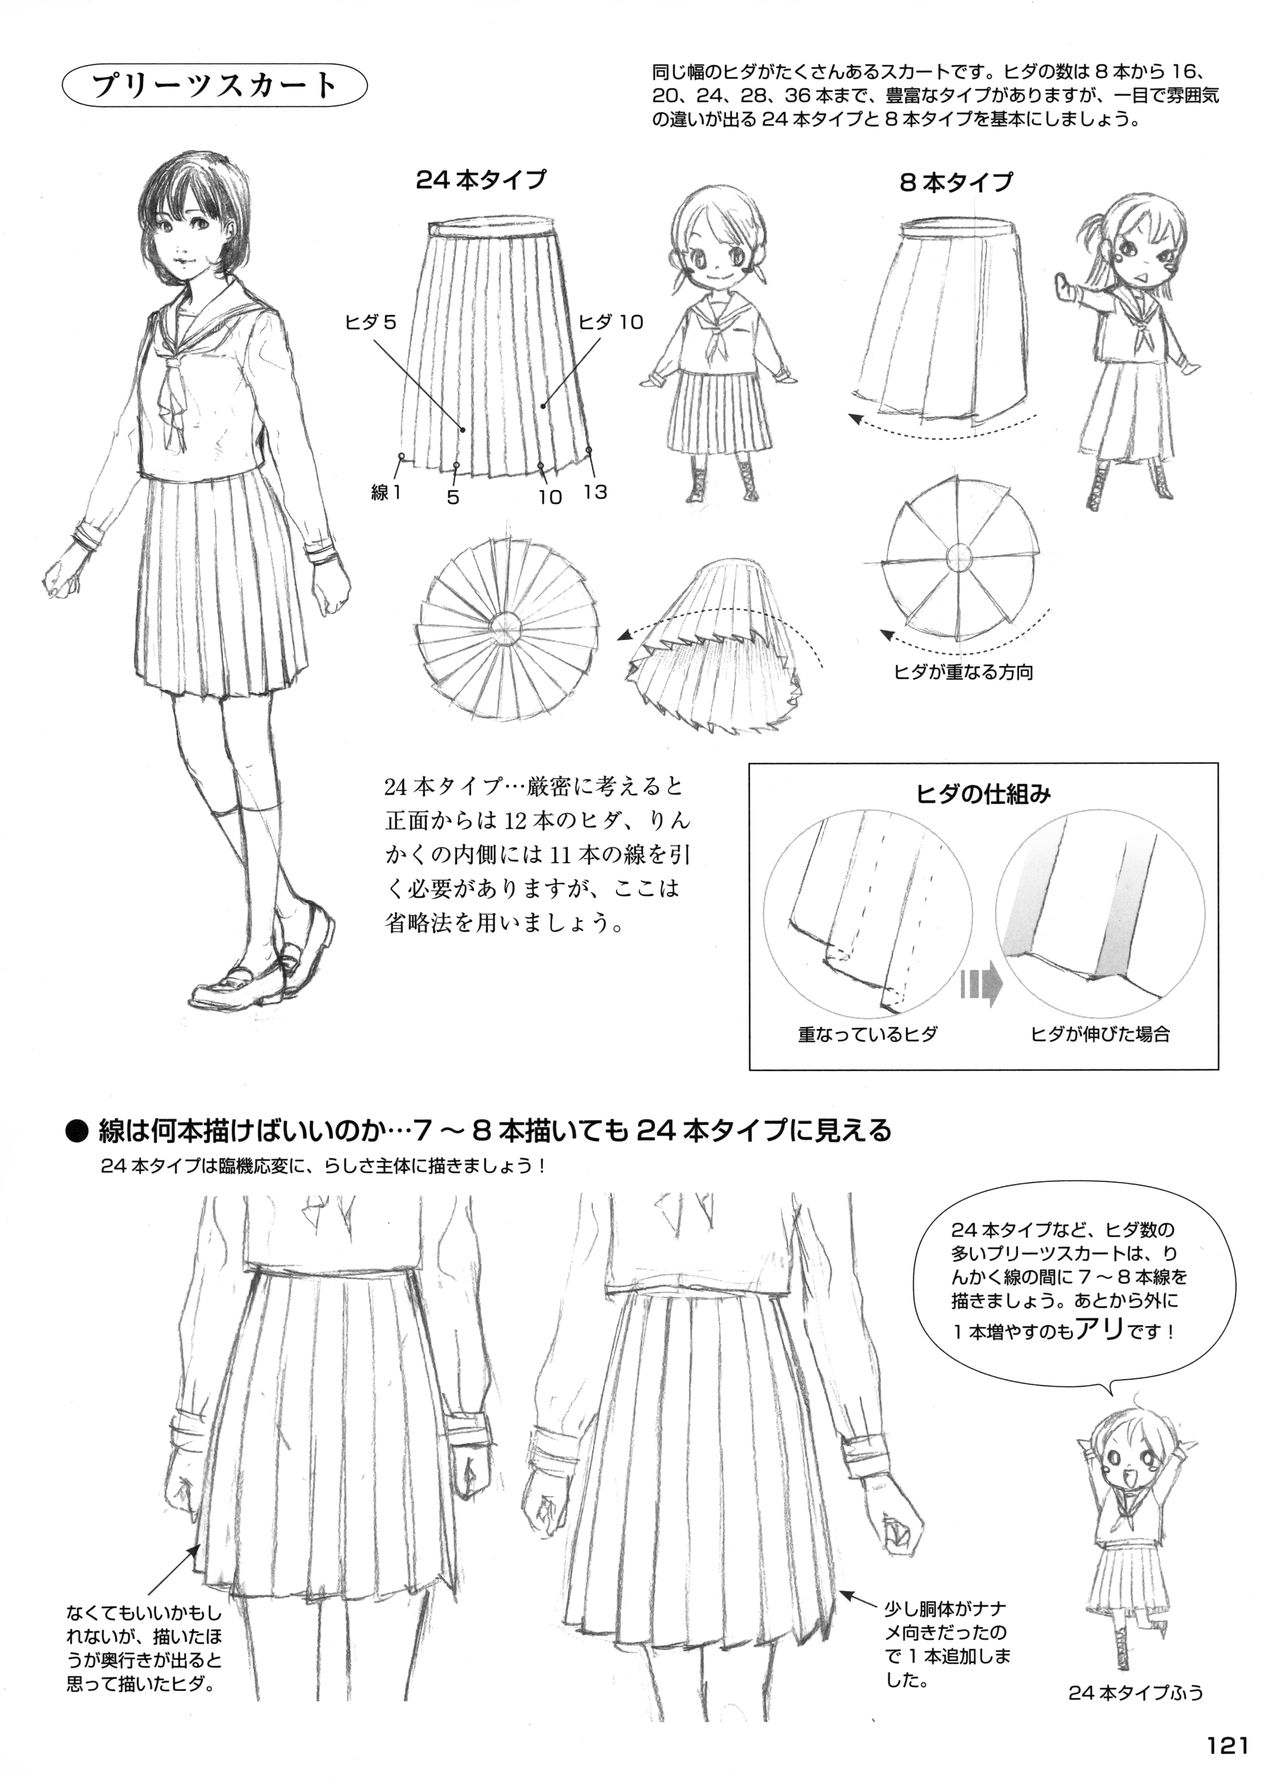 Manga no Kiso Dessin - Onnanoko Costume hen 121